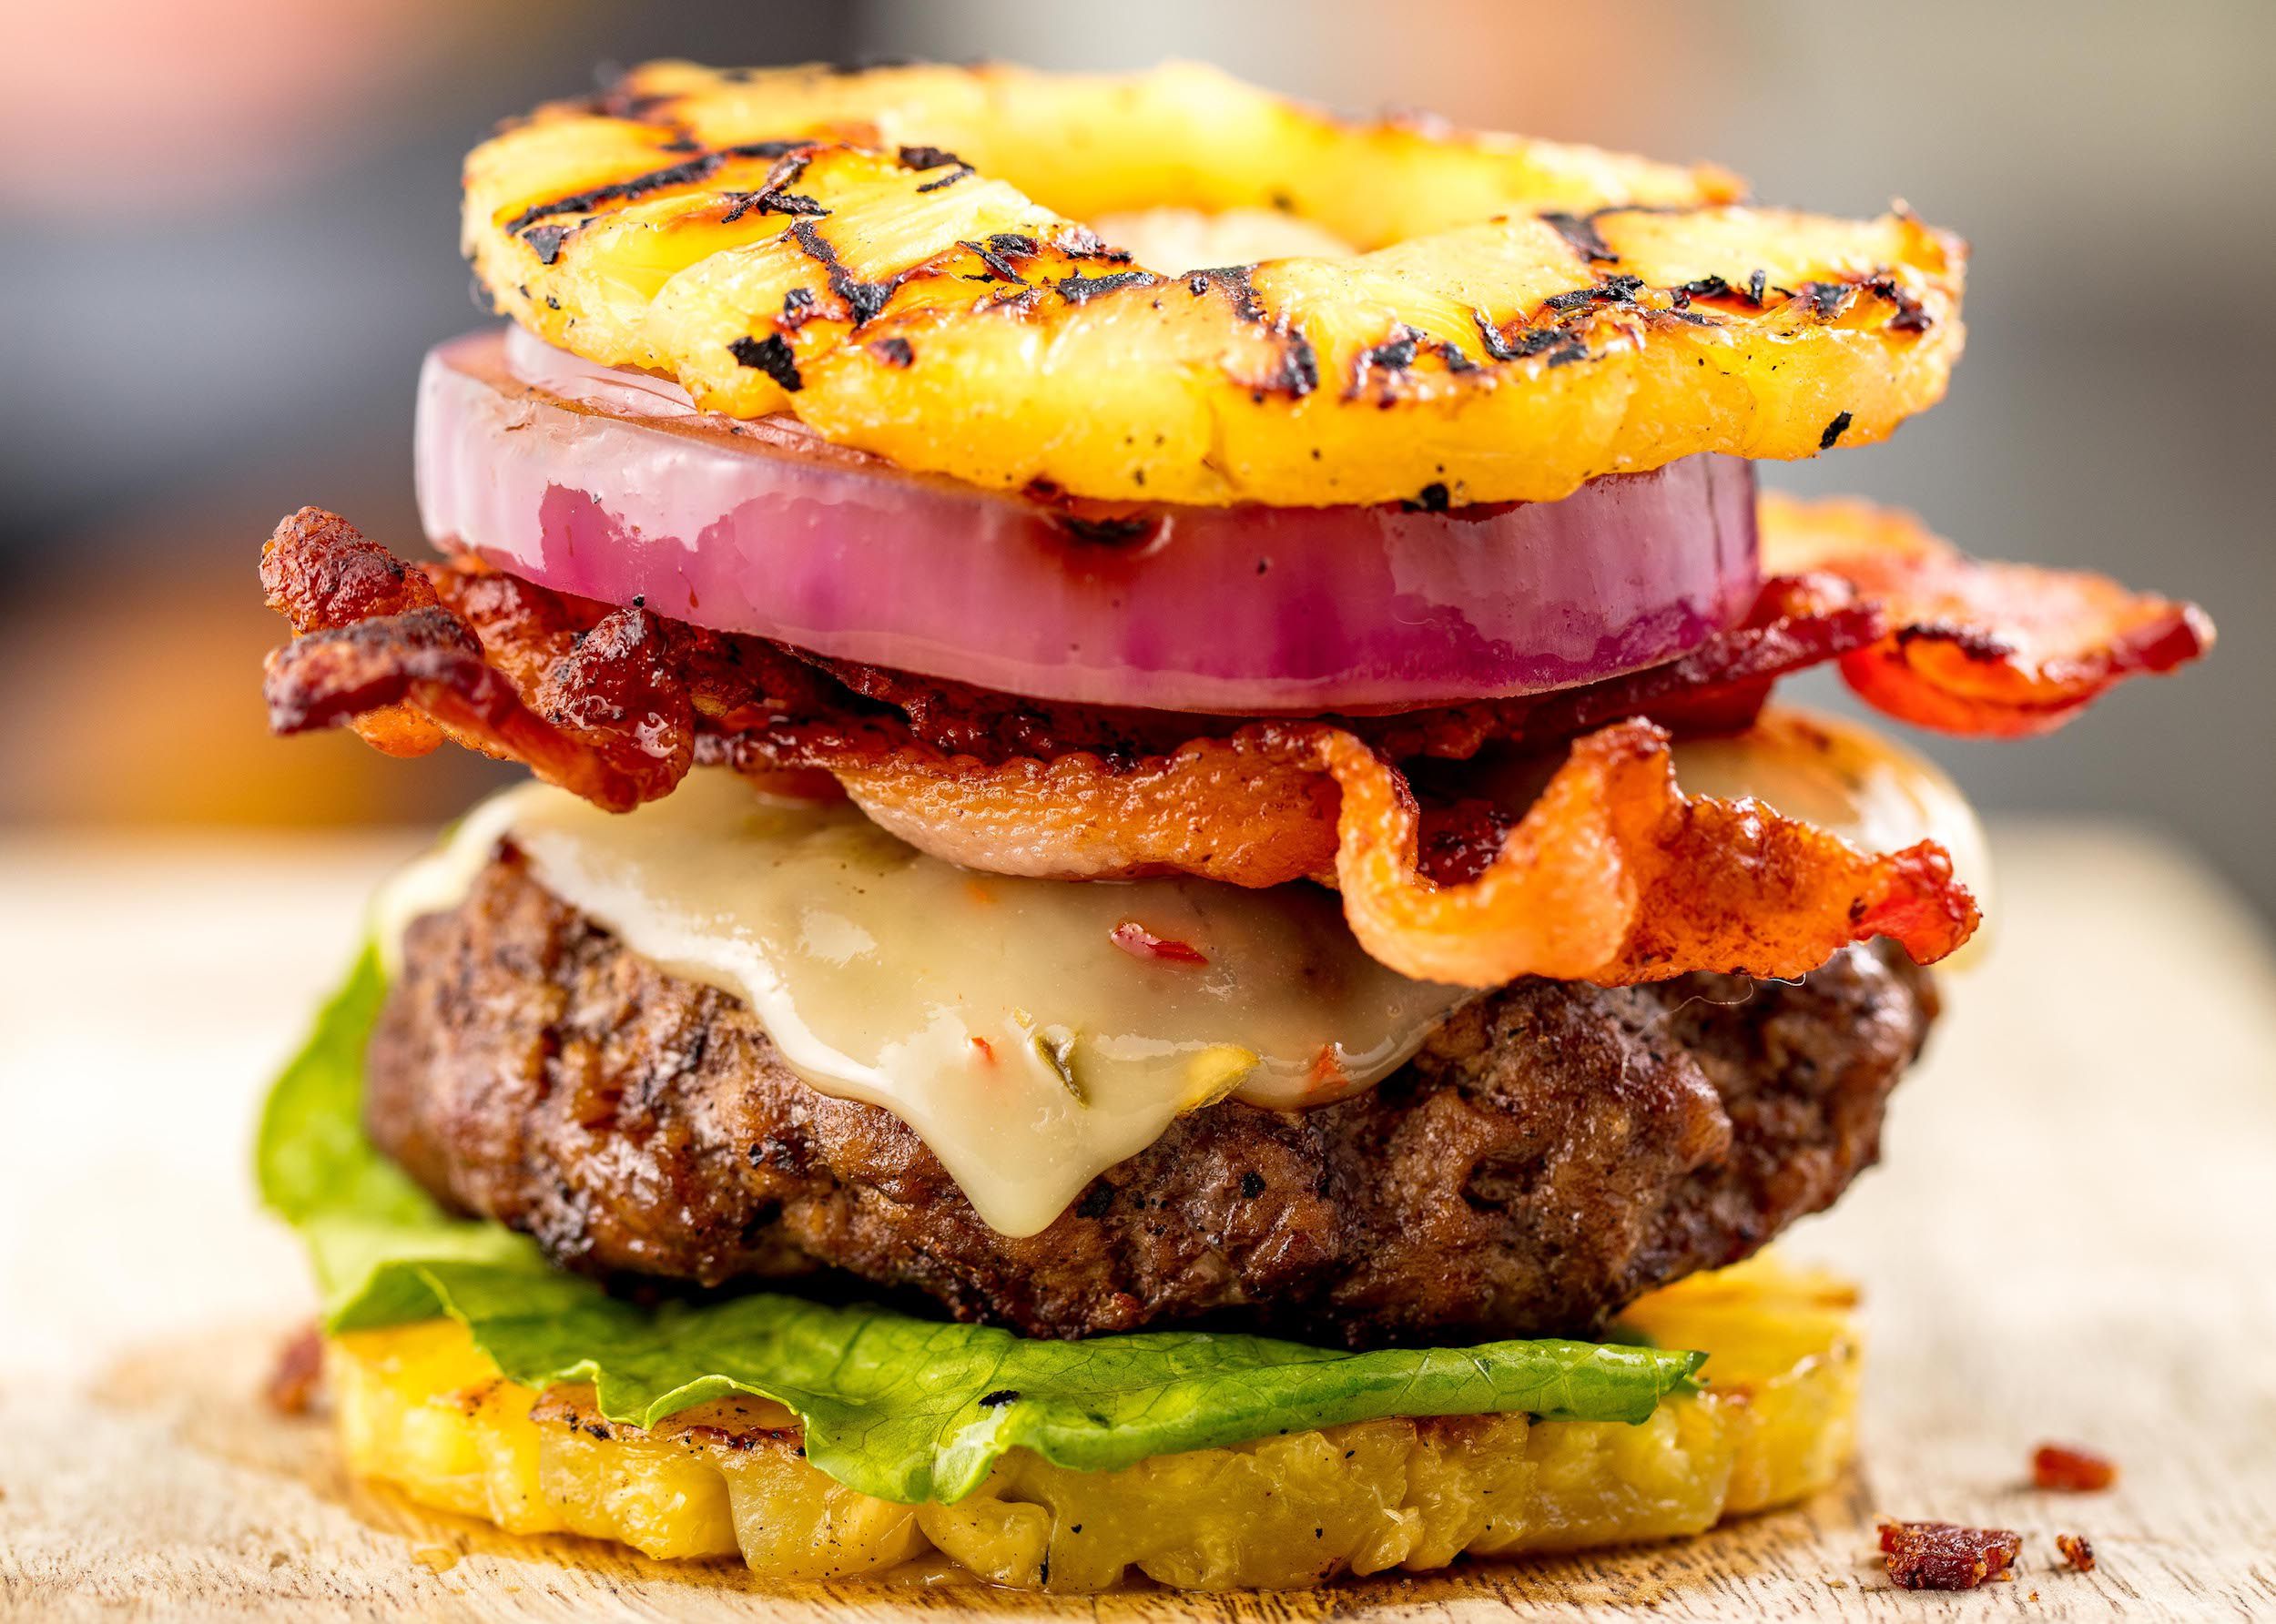 Best Pineapple Bun Burgers Recipe - How to Make Pineapple Bun Burgers